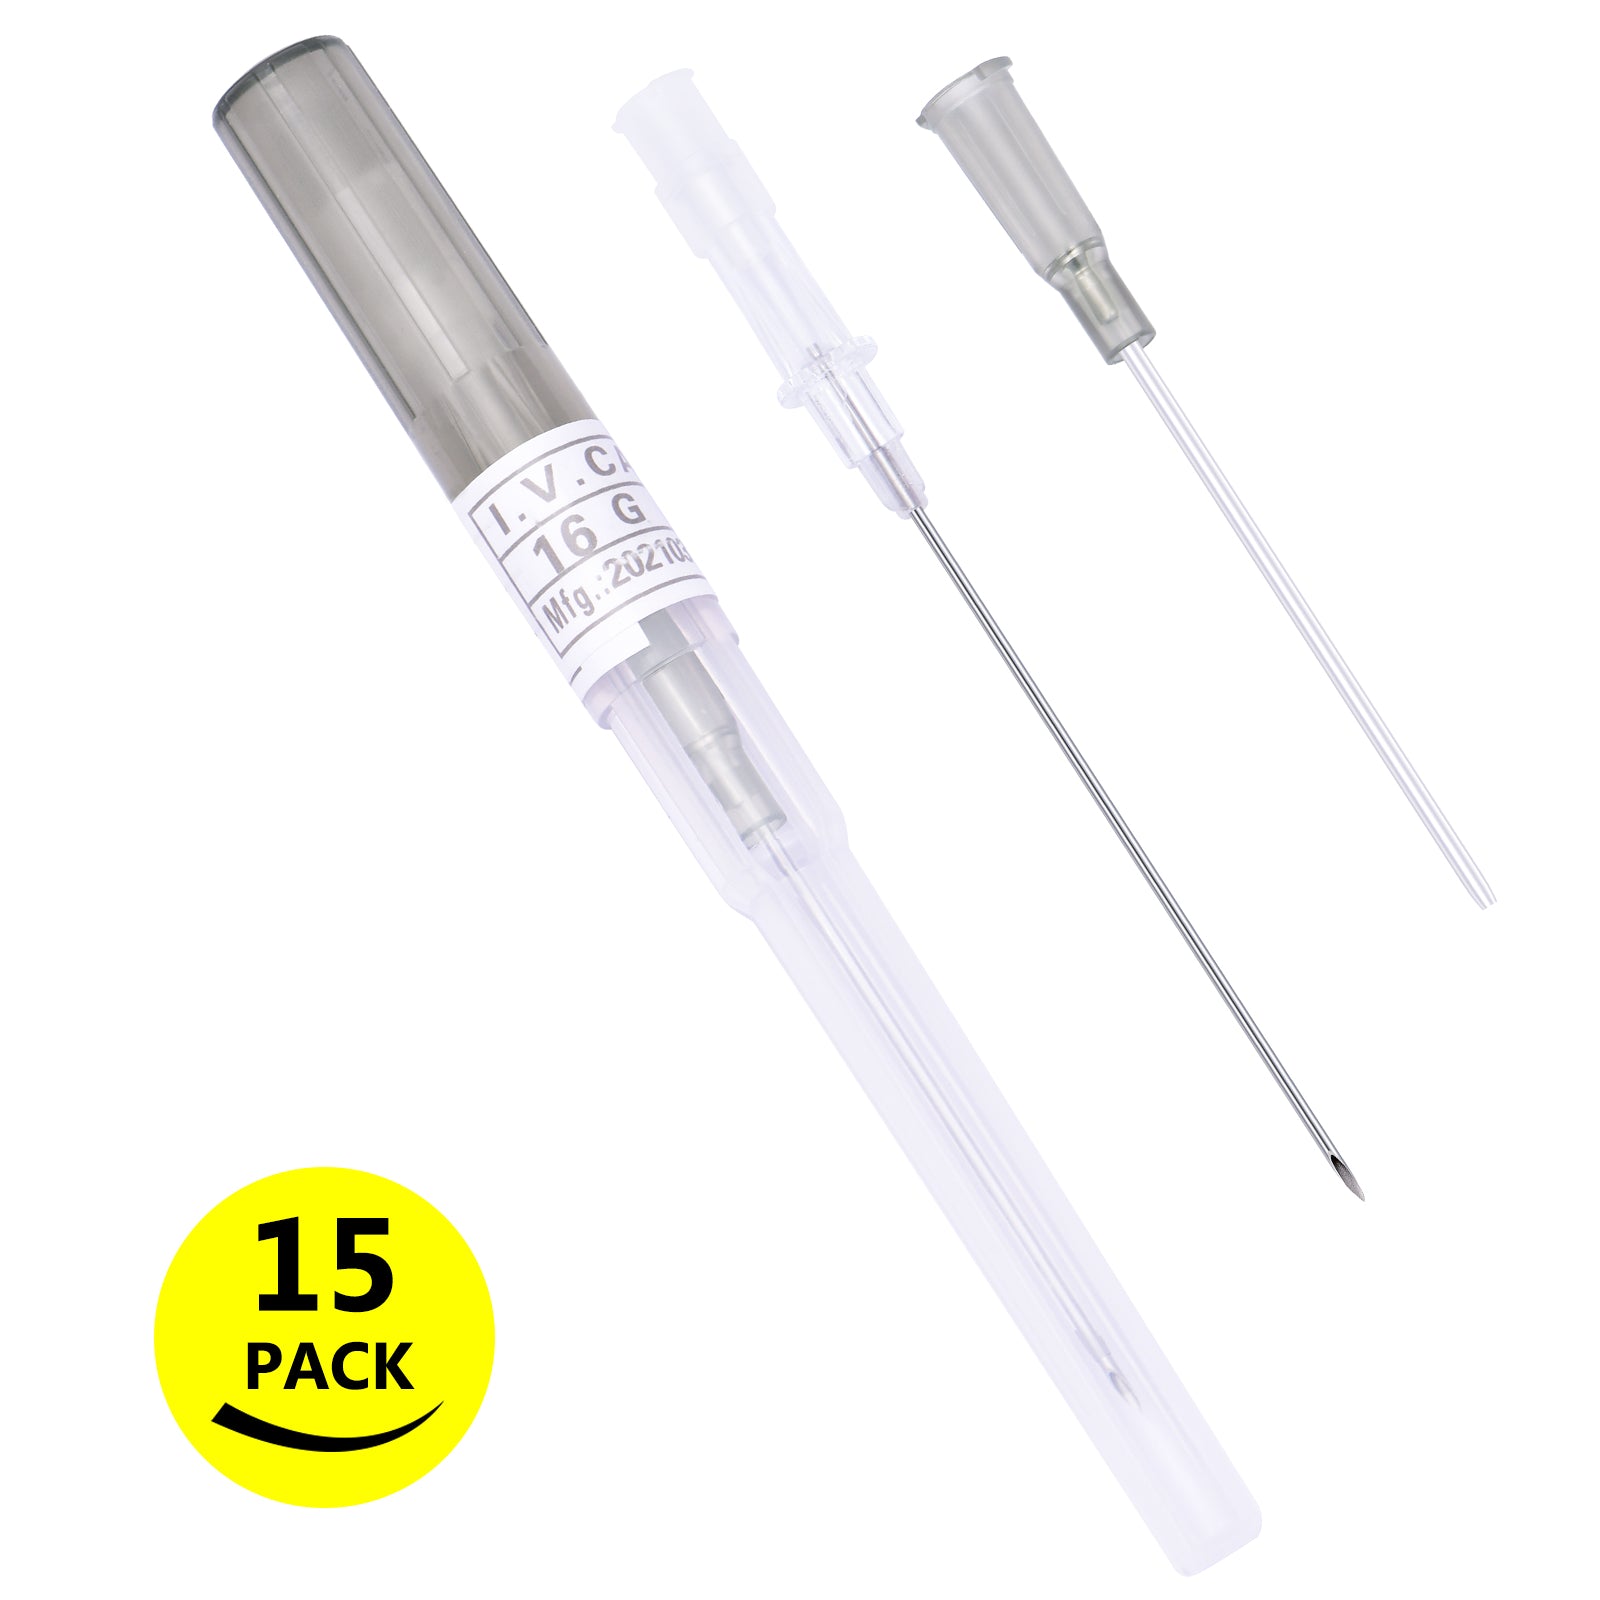 15PCS Mixed Catheter Piercing Needles,14G 16 18G 20G 22G Disposable Stainless Steel Needles Piercing for Belly Navel Lip Eyebrow Navel Earrings Piercing